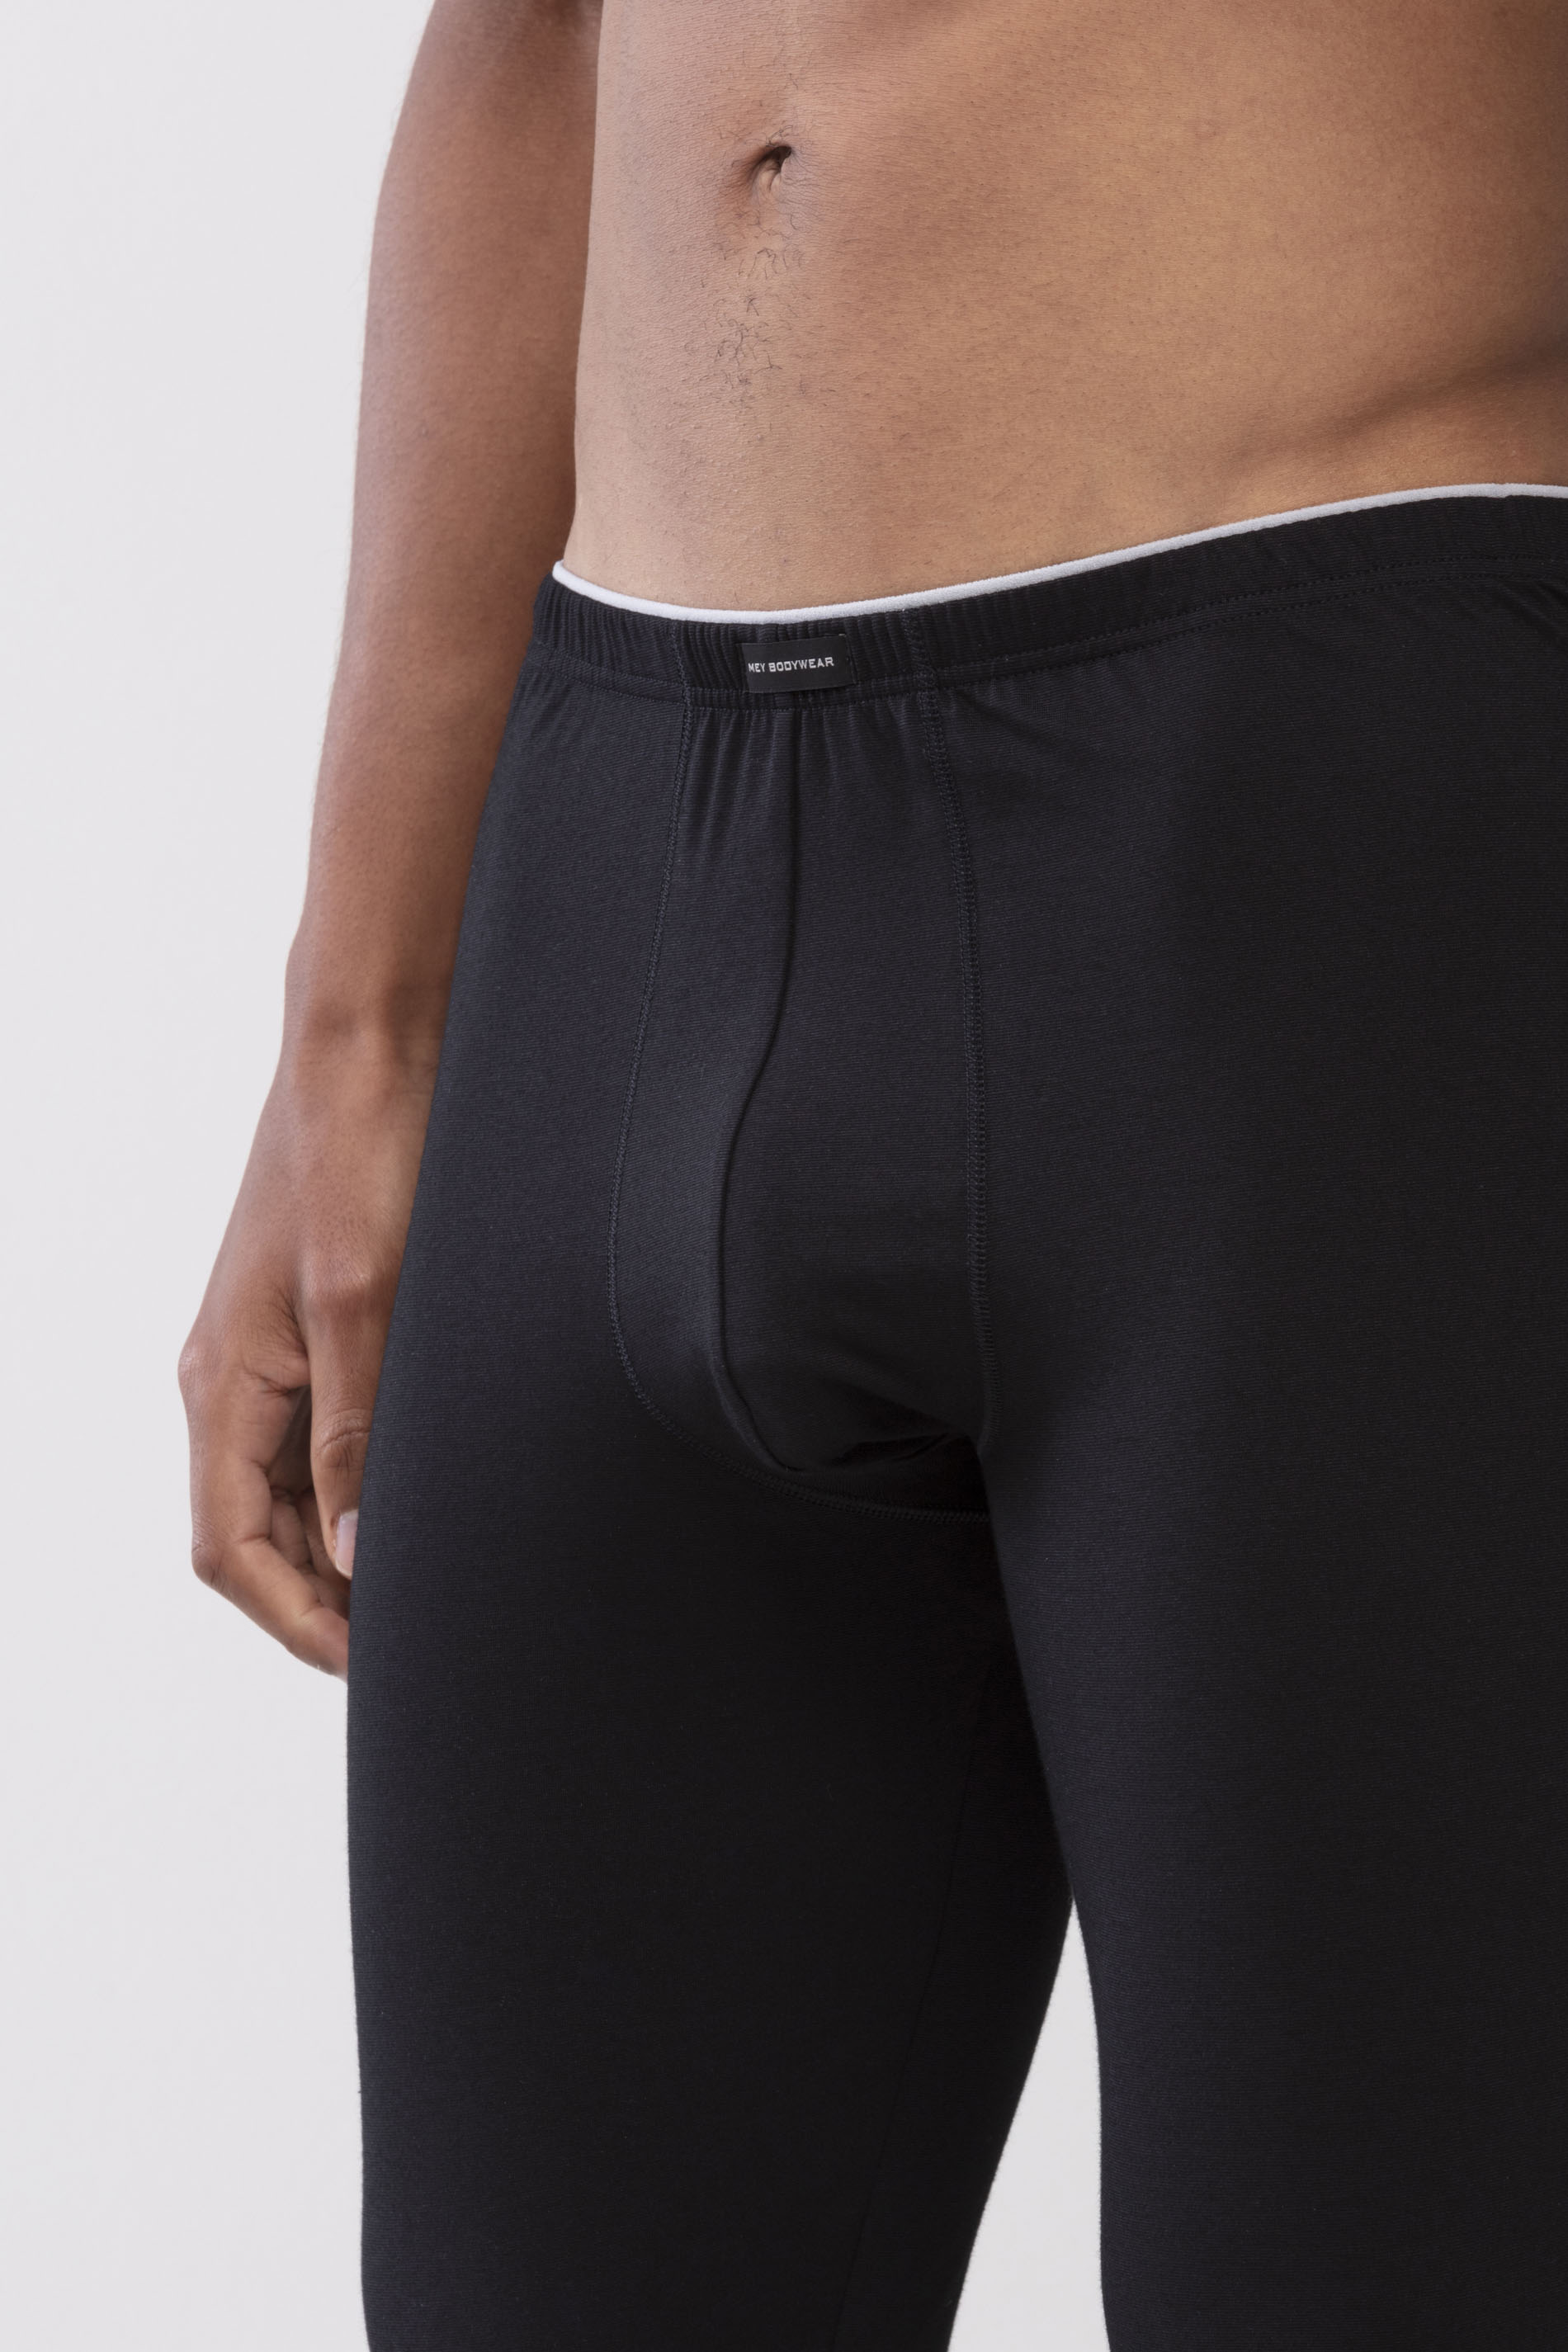 Long-Shorts Black Serie Dry Cotton Detail View 01 | mey®